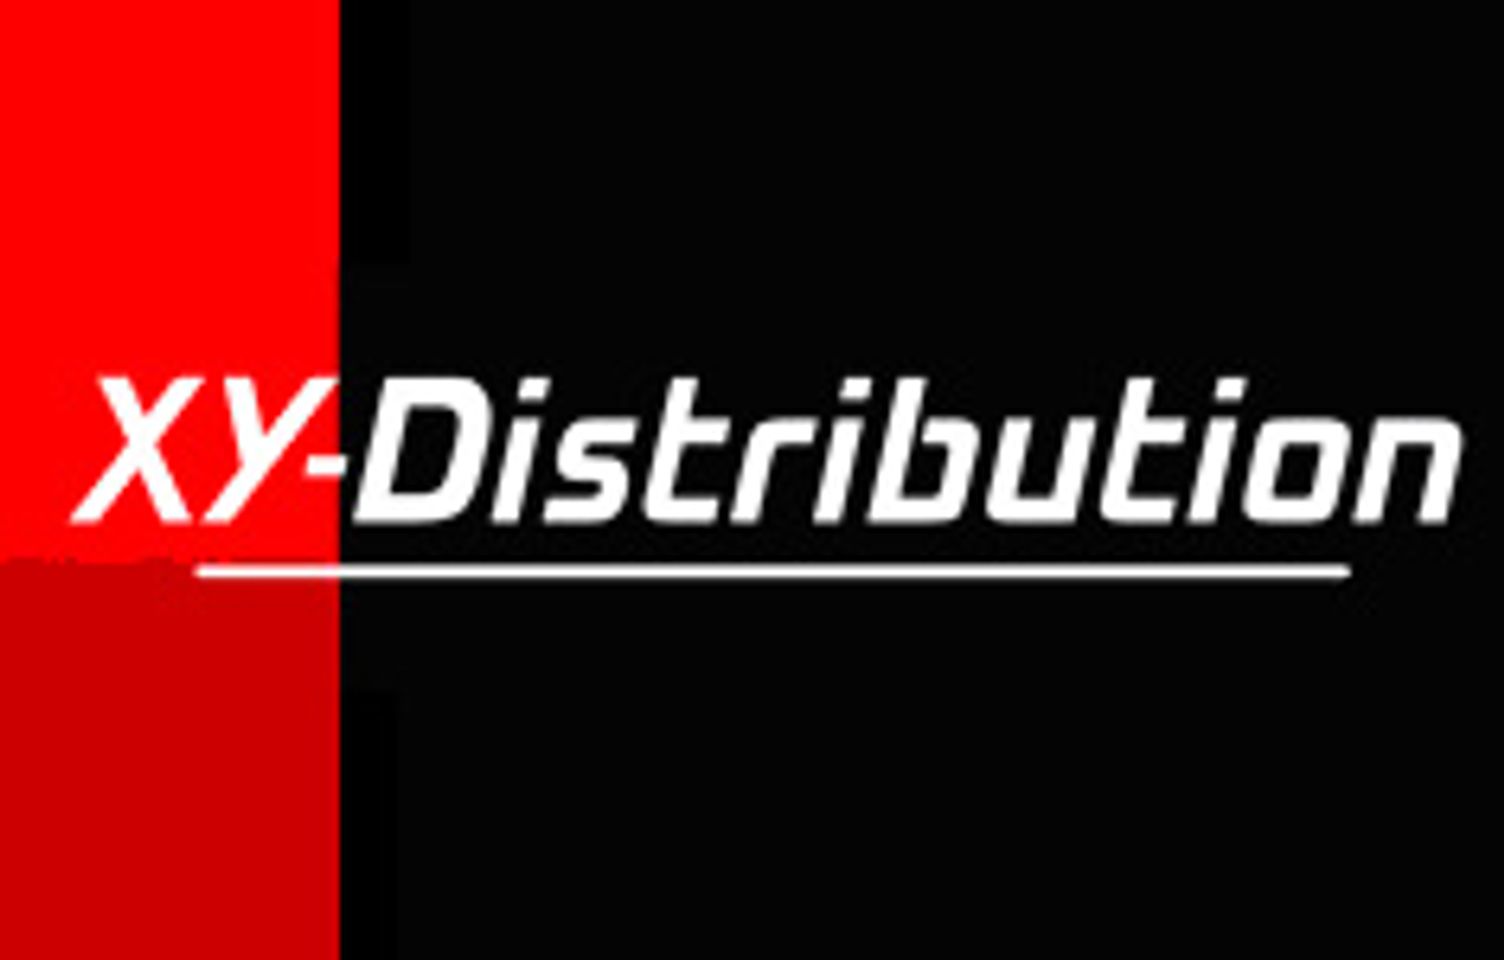 XY-Distribution Readies Two New Titles